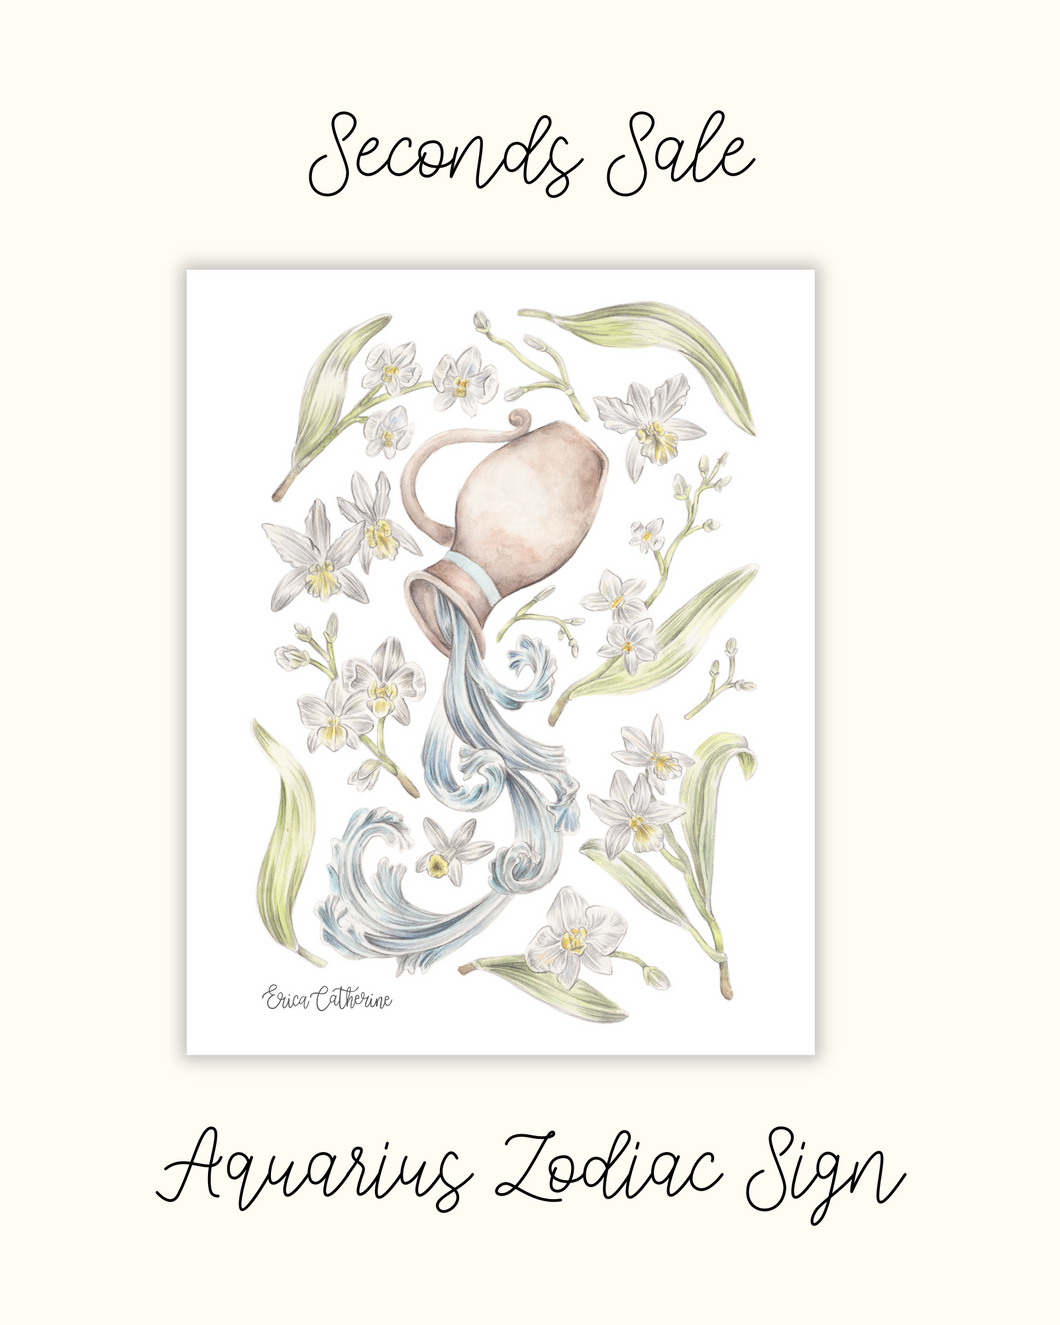 Aquarius Zodiac Sign - Seconds Sale